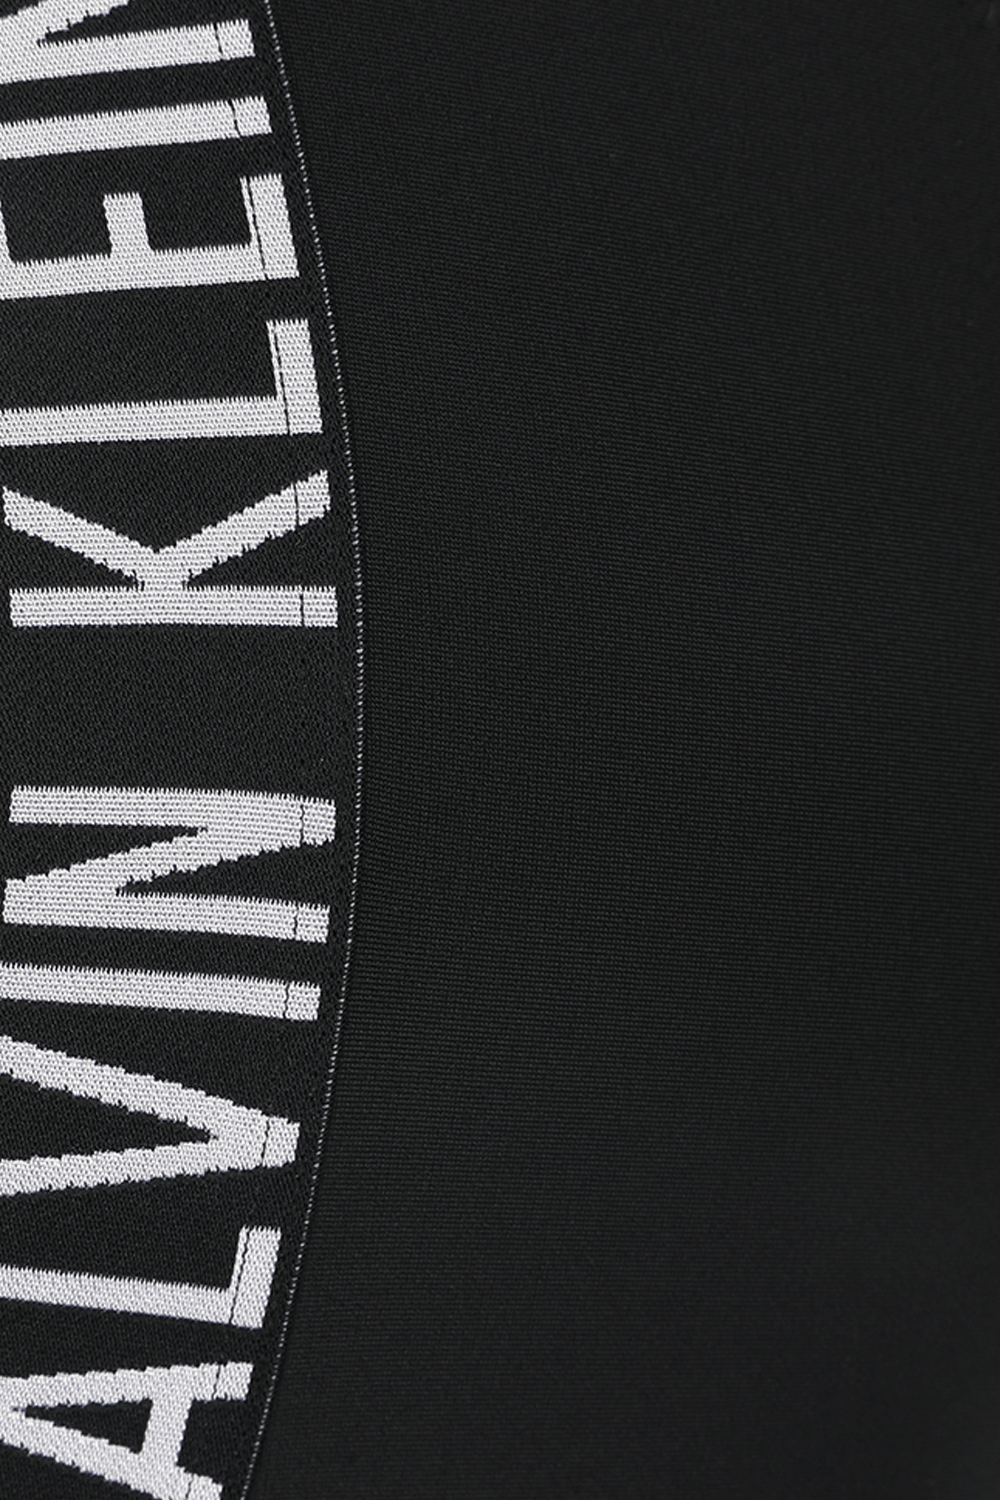 Classic Logo Bikini Bottom in Black and White CALVIN KLEIN